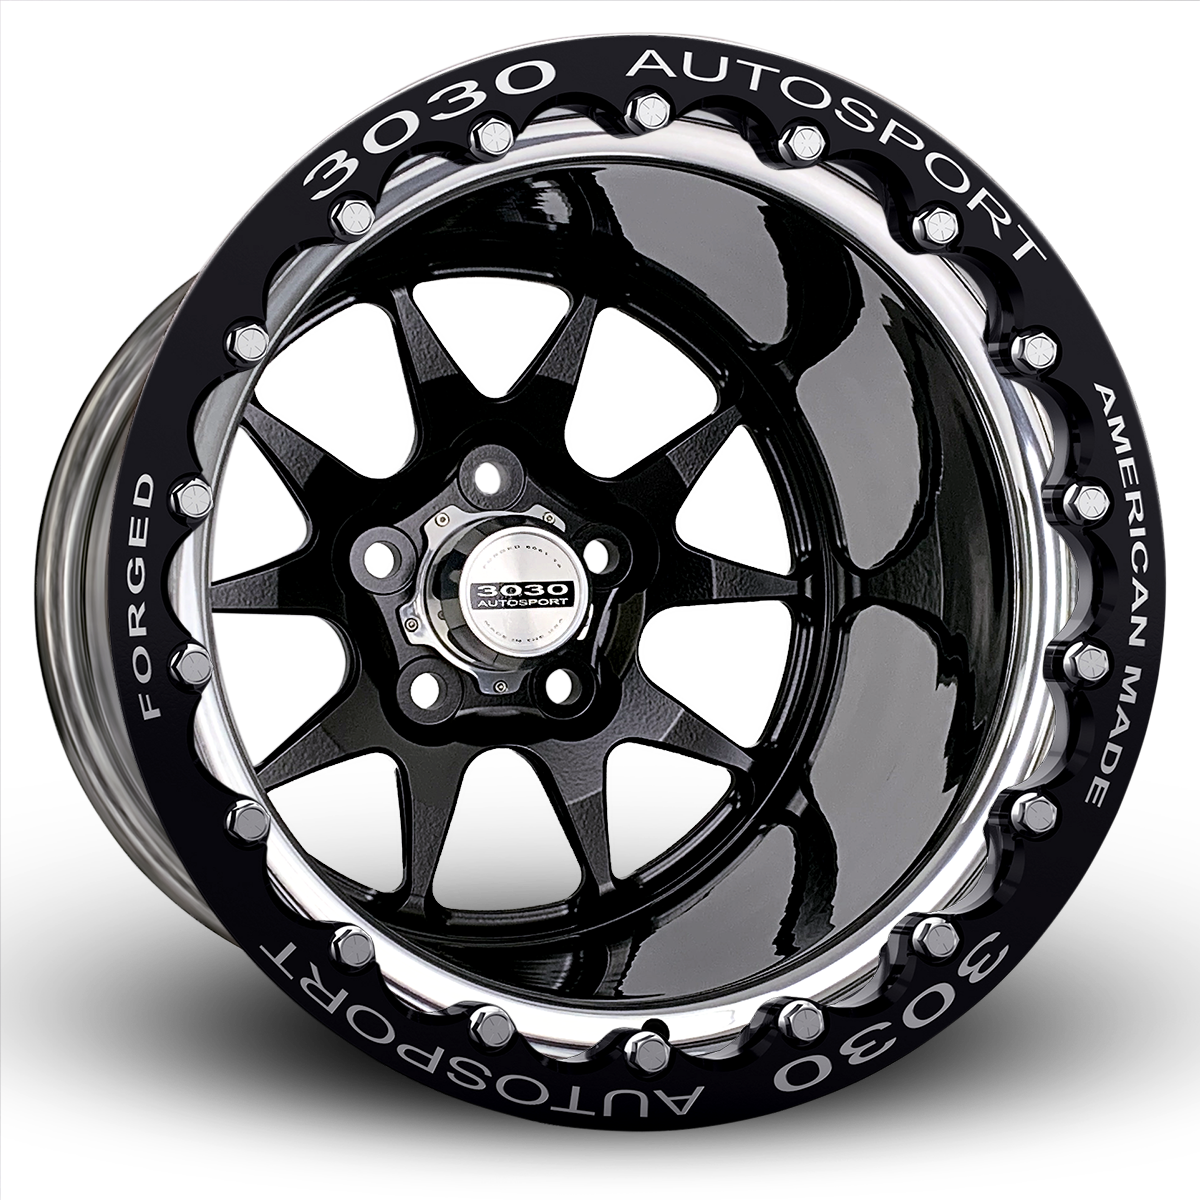 MACH-10 Double-Beadlock Wheel, Size: 15x9", Bolt Pattern: 5x5", Backspace: 5" [Black/Polished]